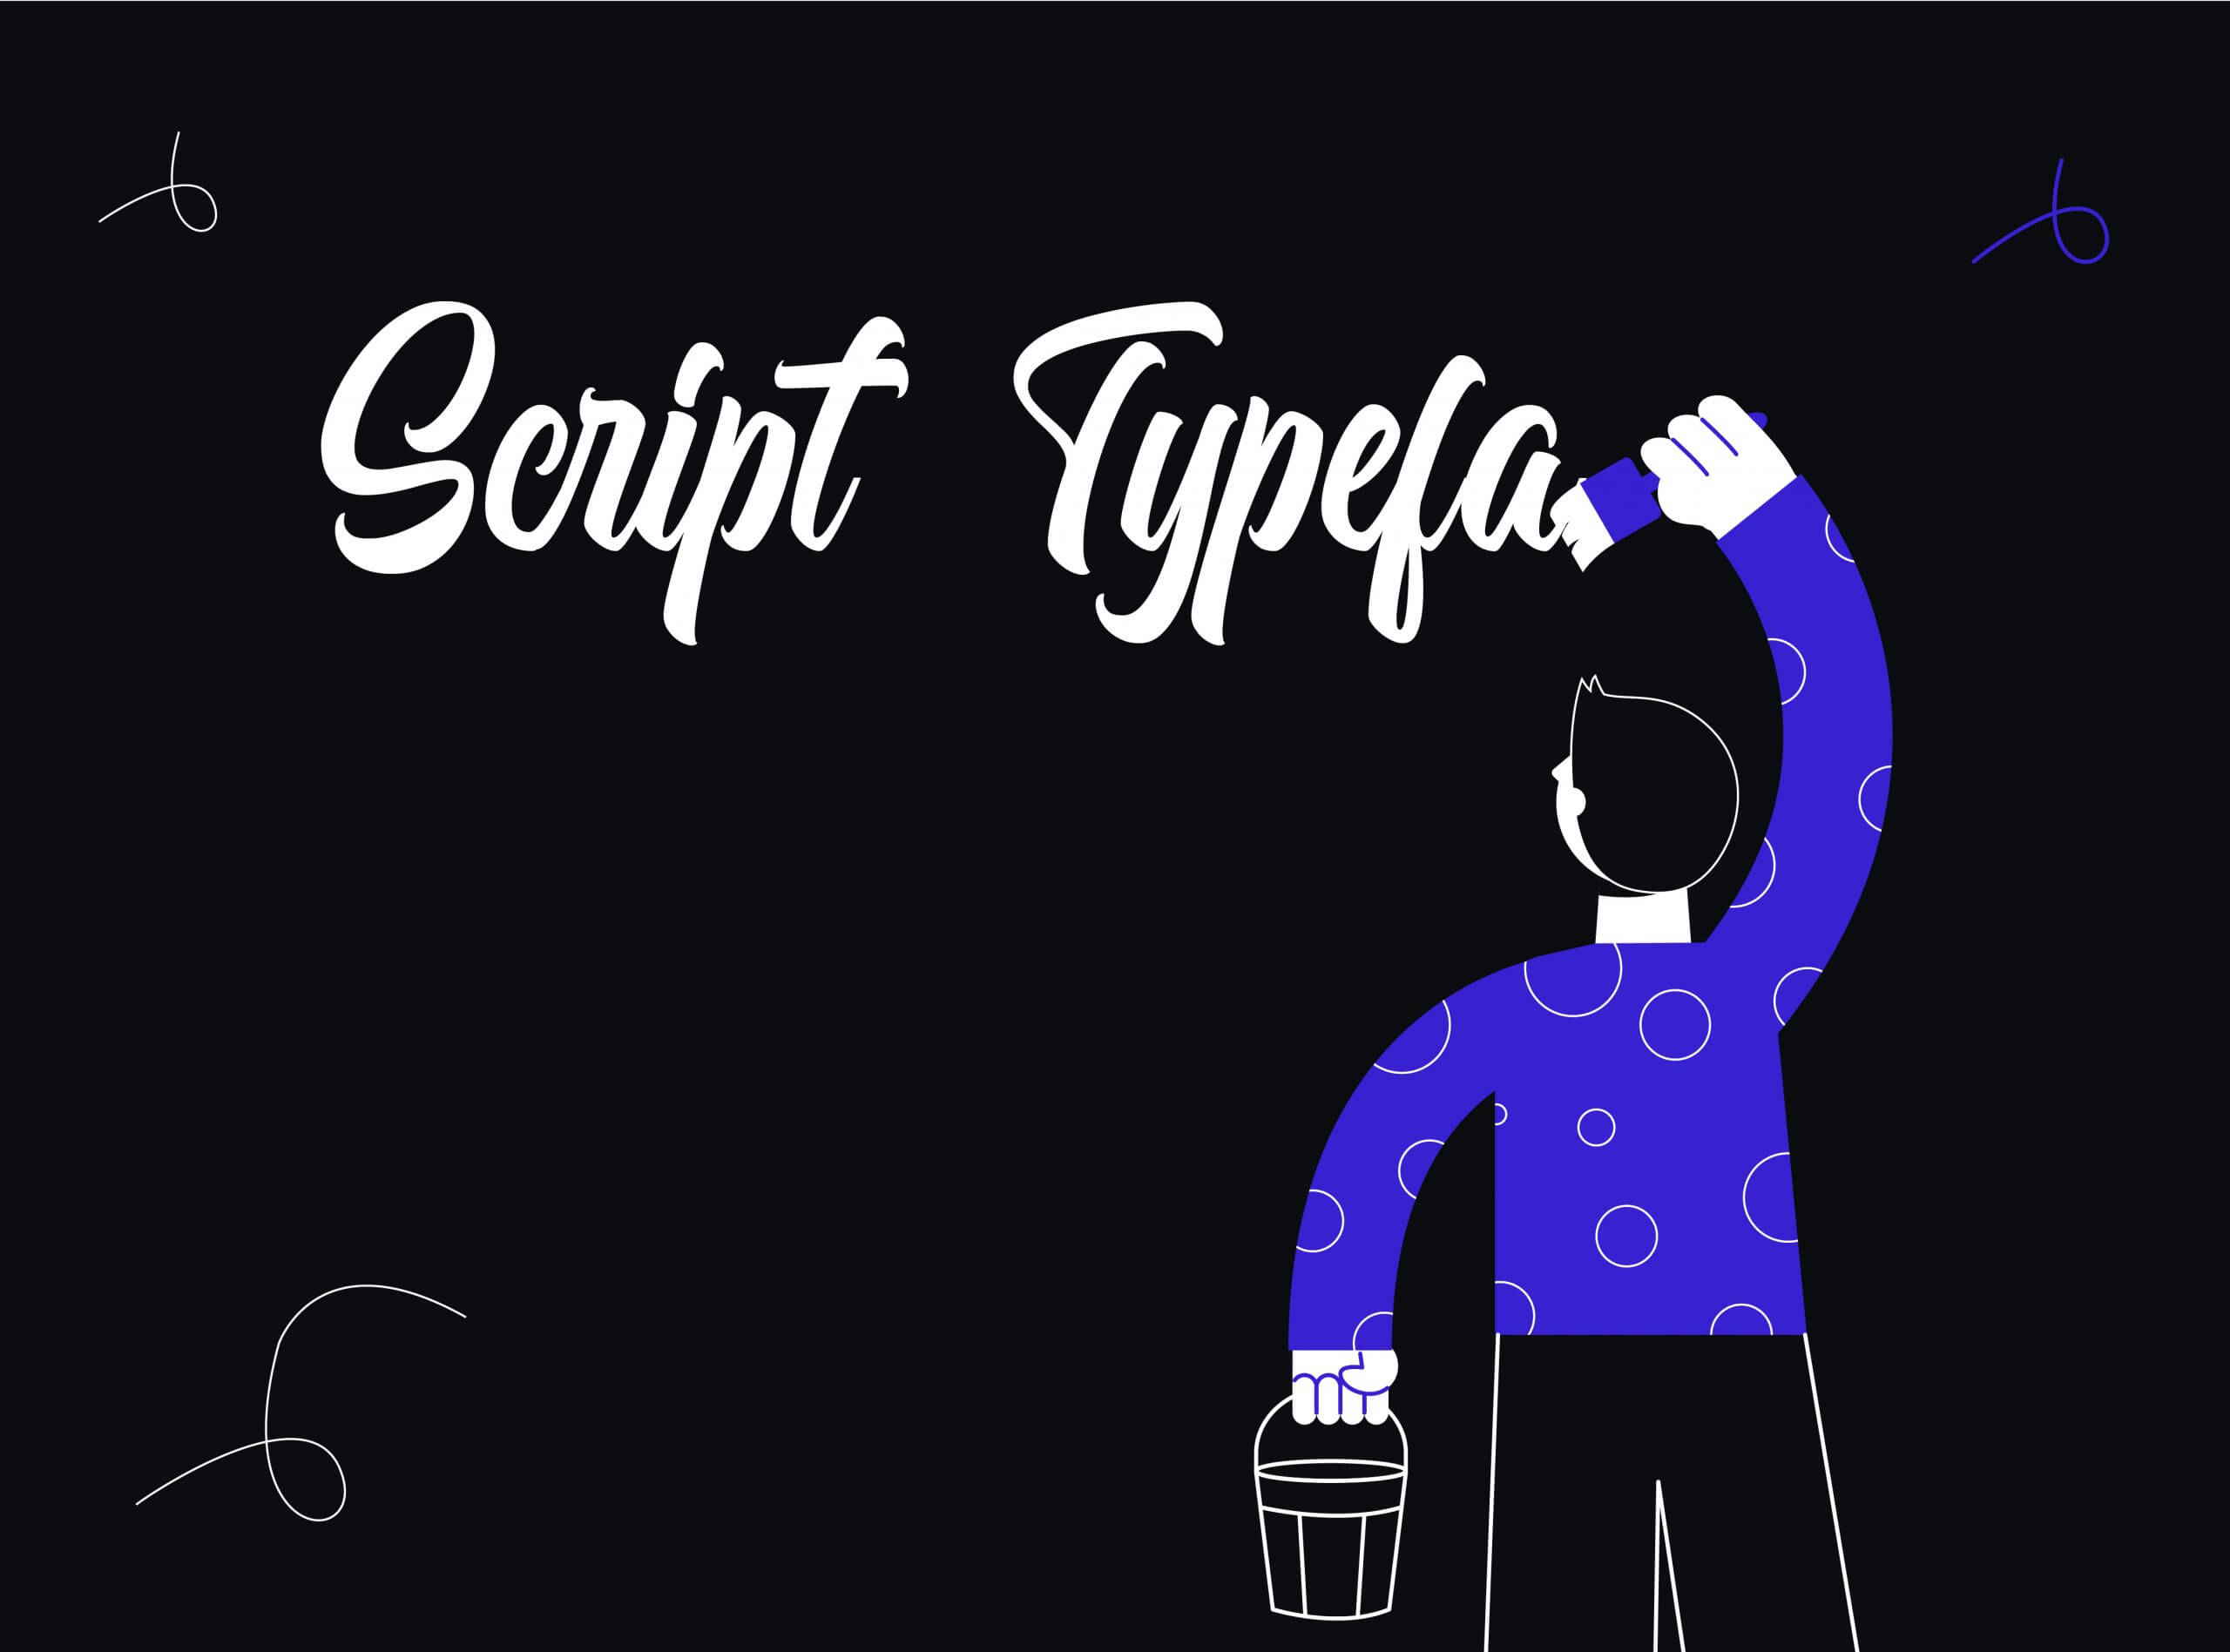 Script Typeface & Types of Script Typeface